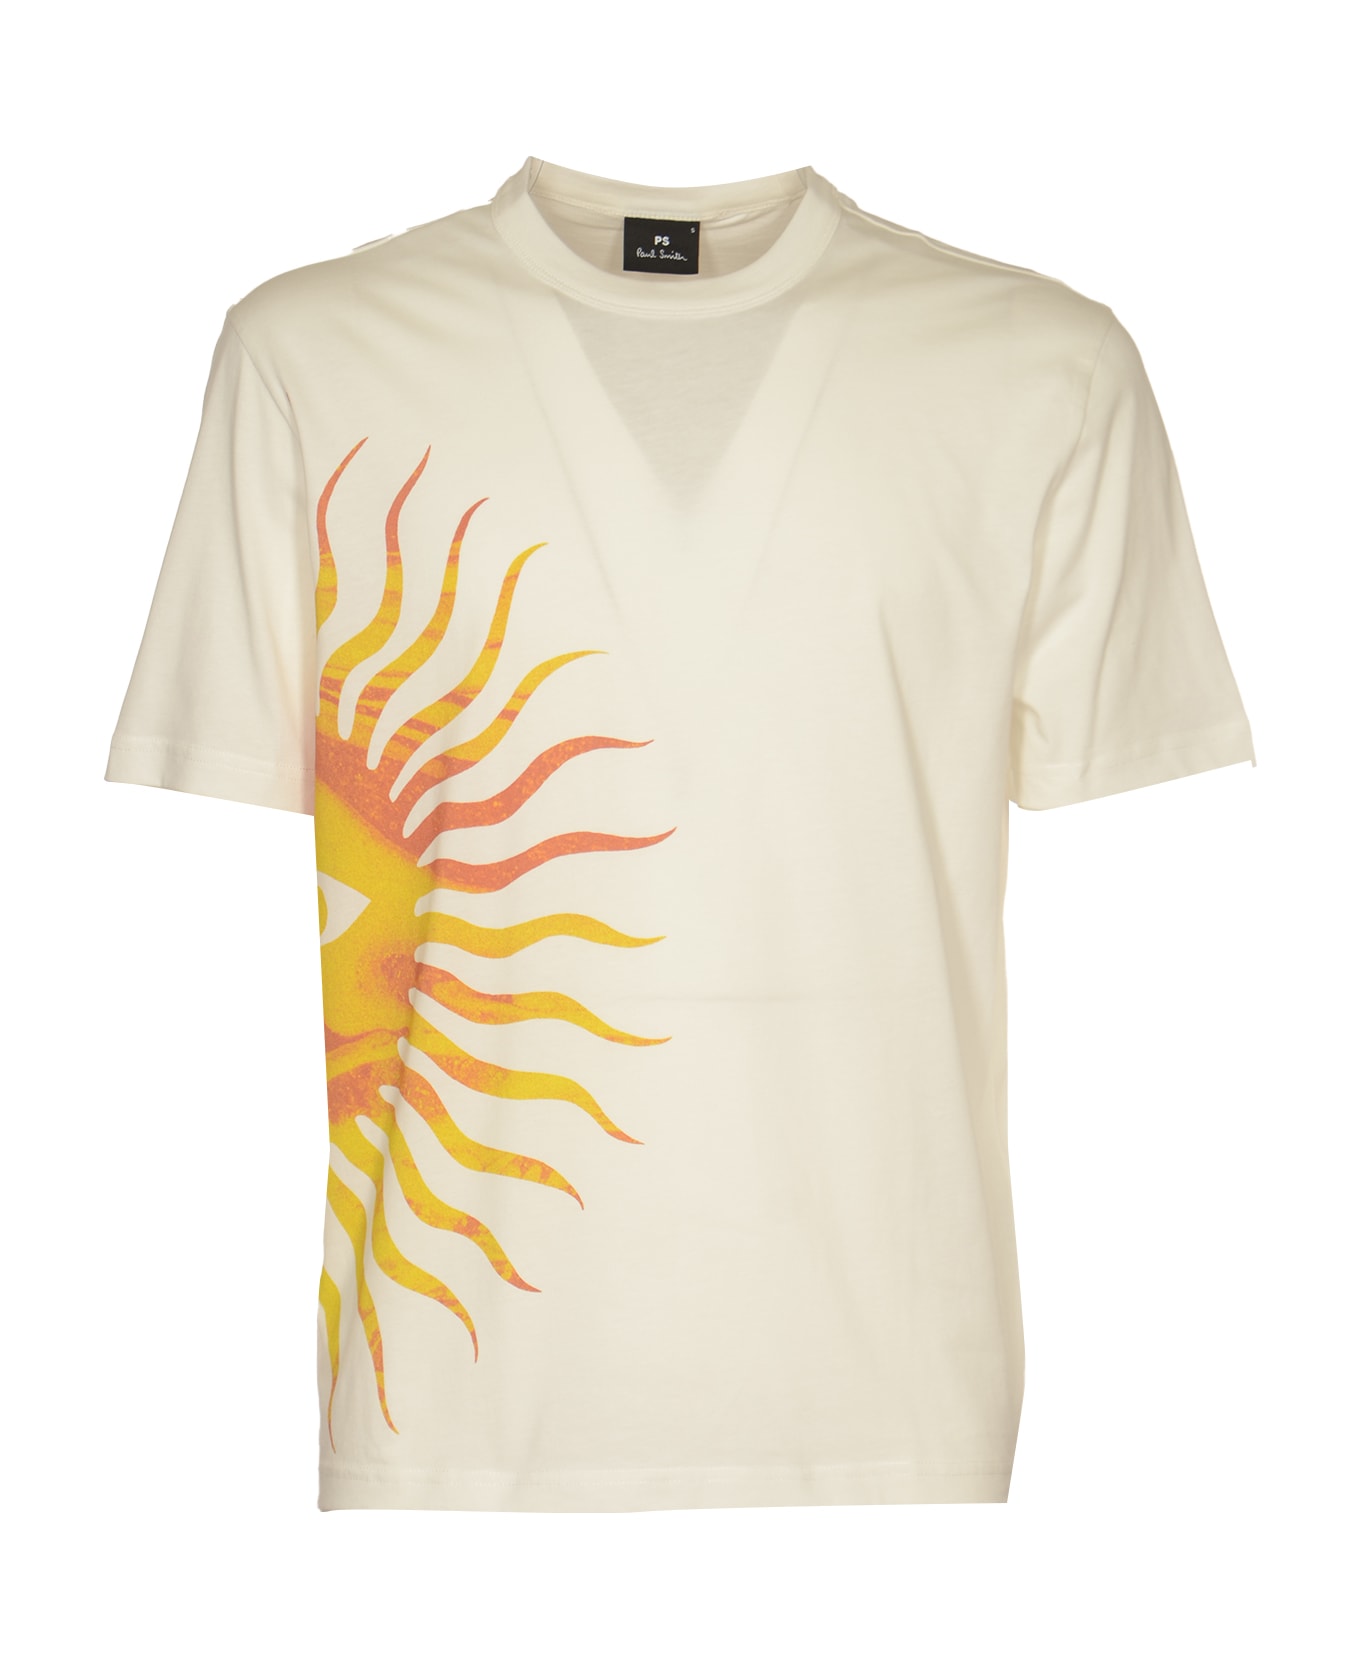 Paul Smith Sunnyside T-shirt - Beige